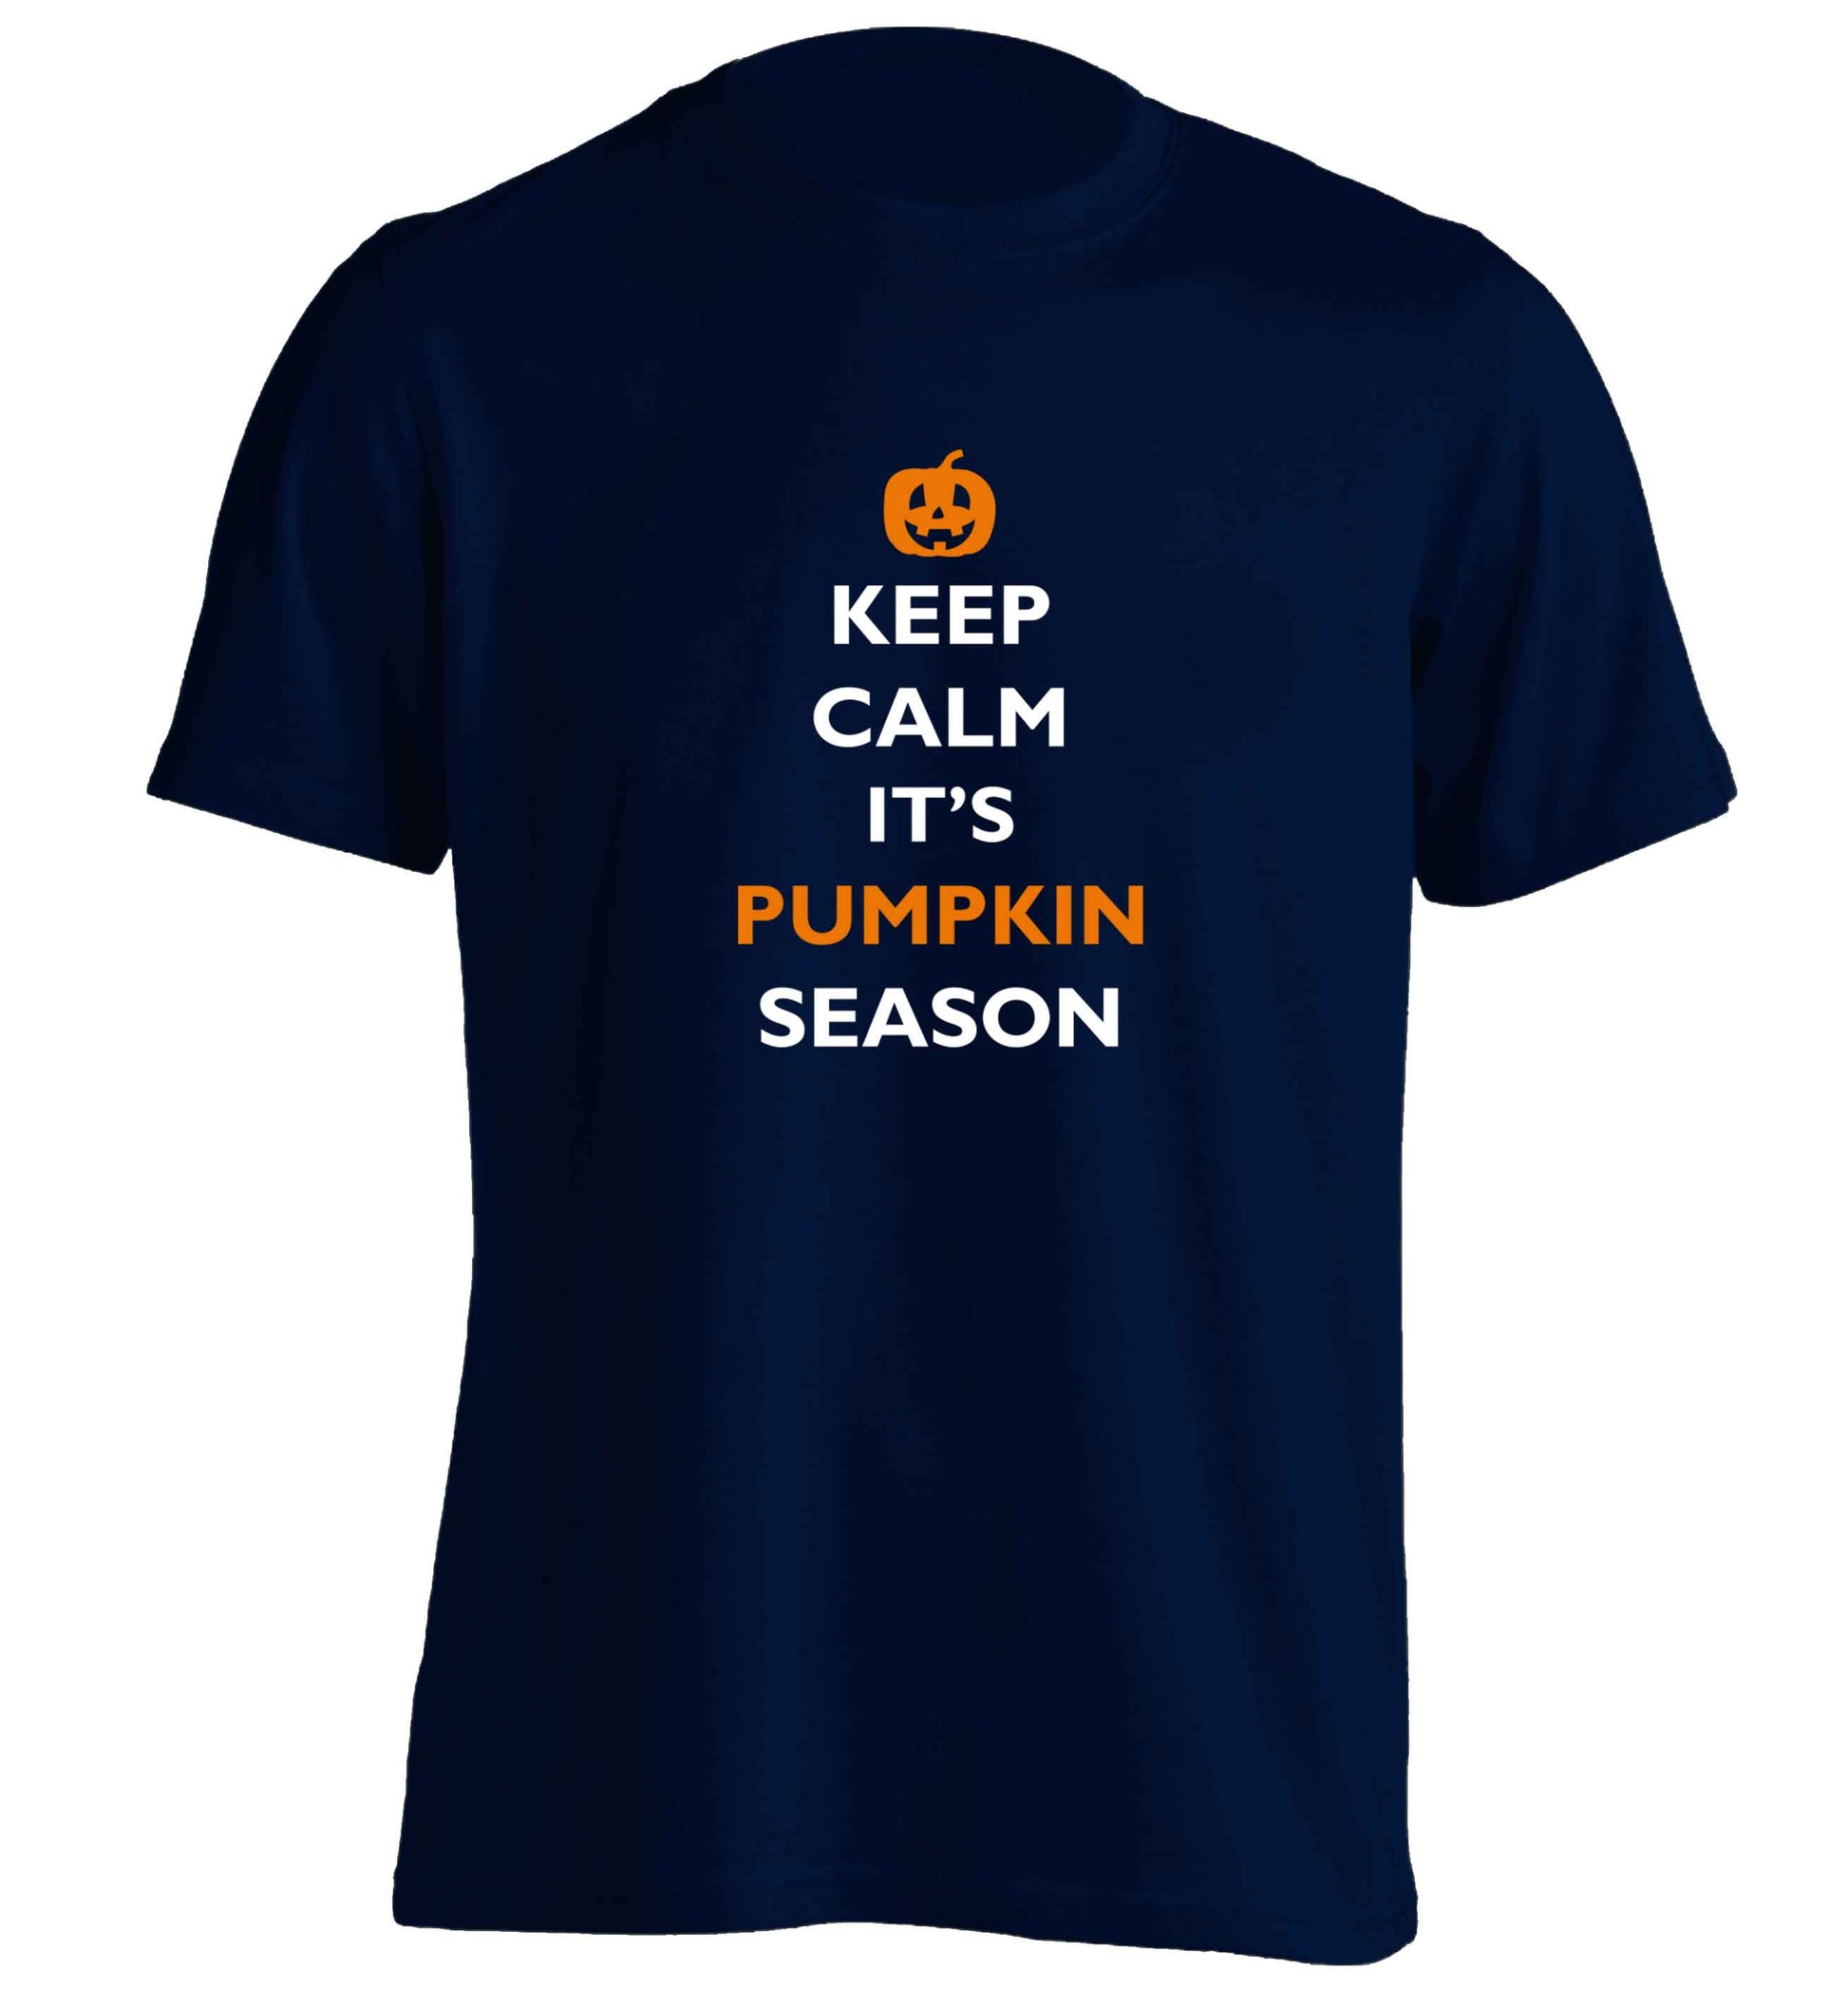 Calm Pumpkin Season adults unisex navy Tshirt 2XL